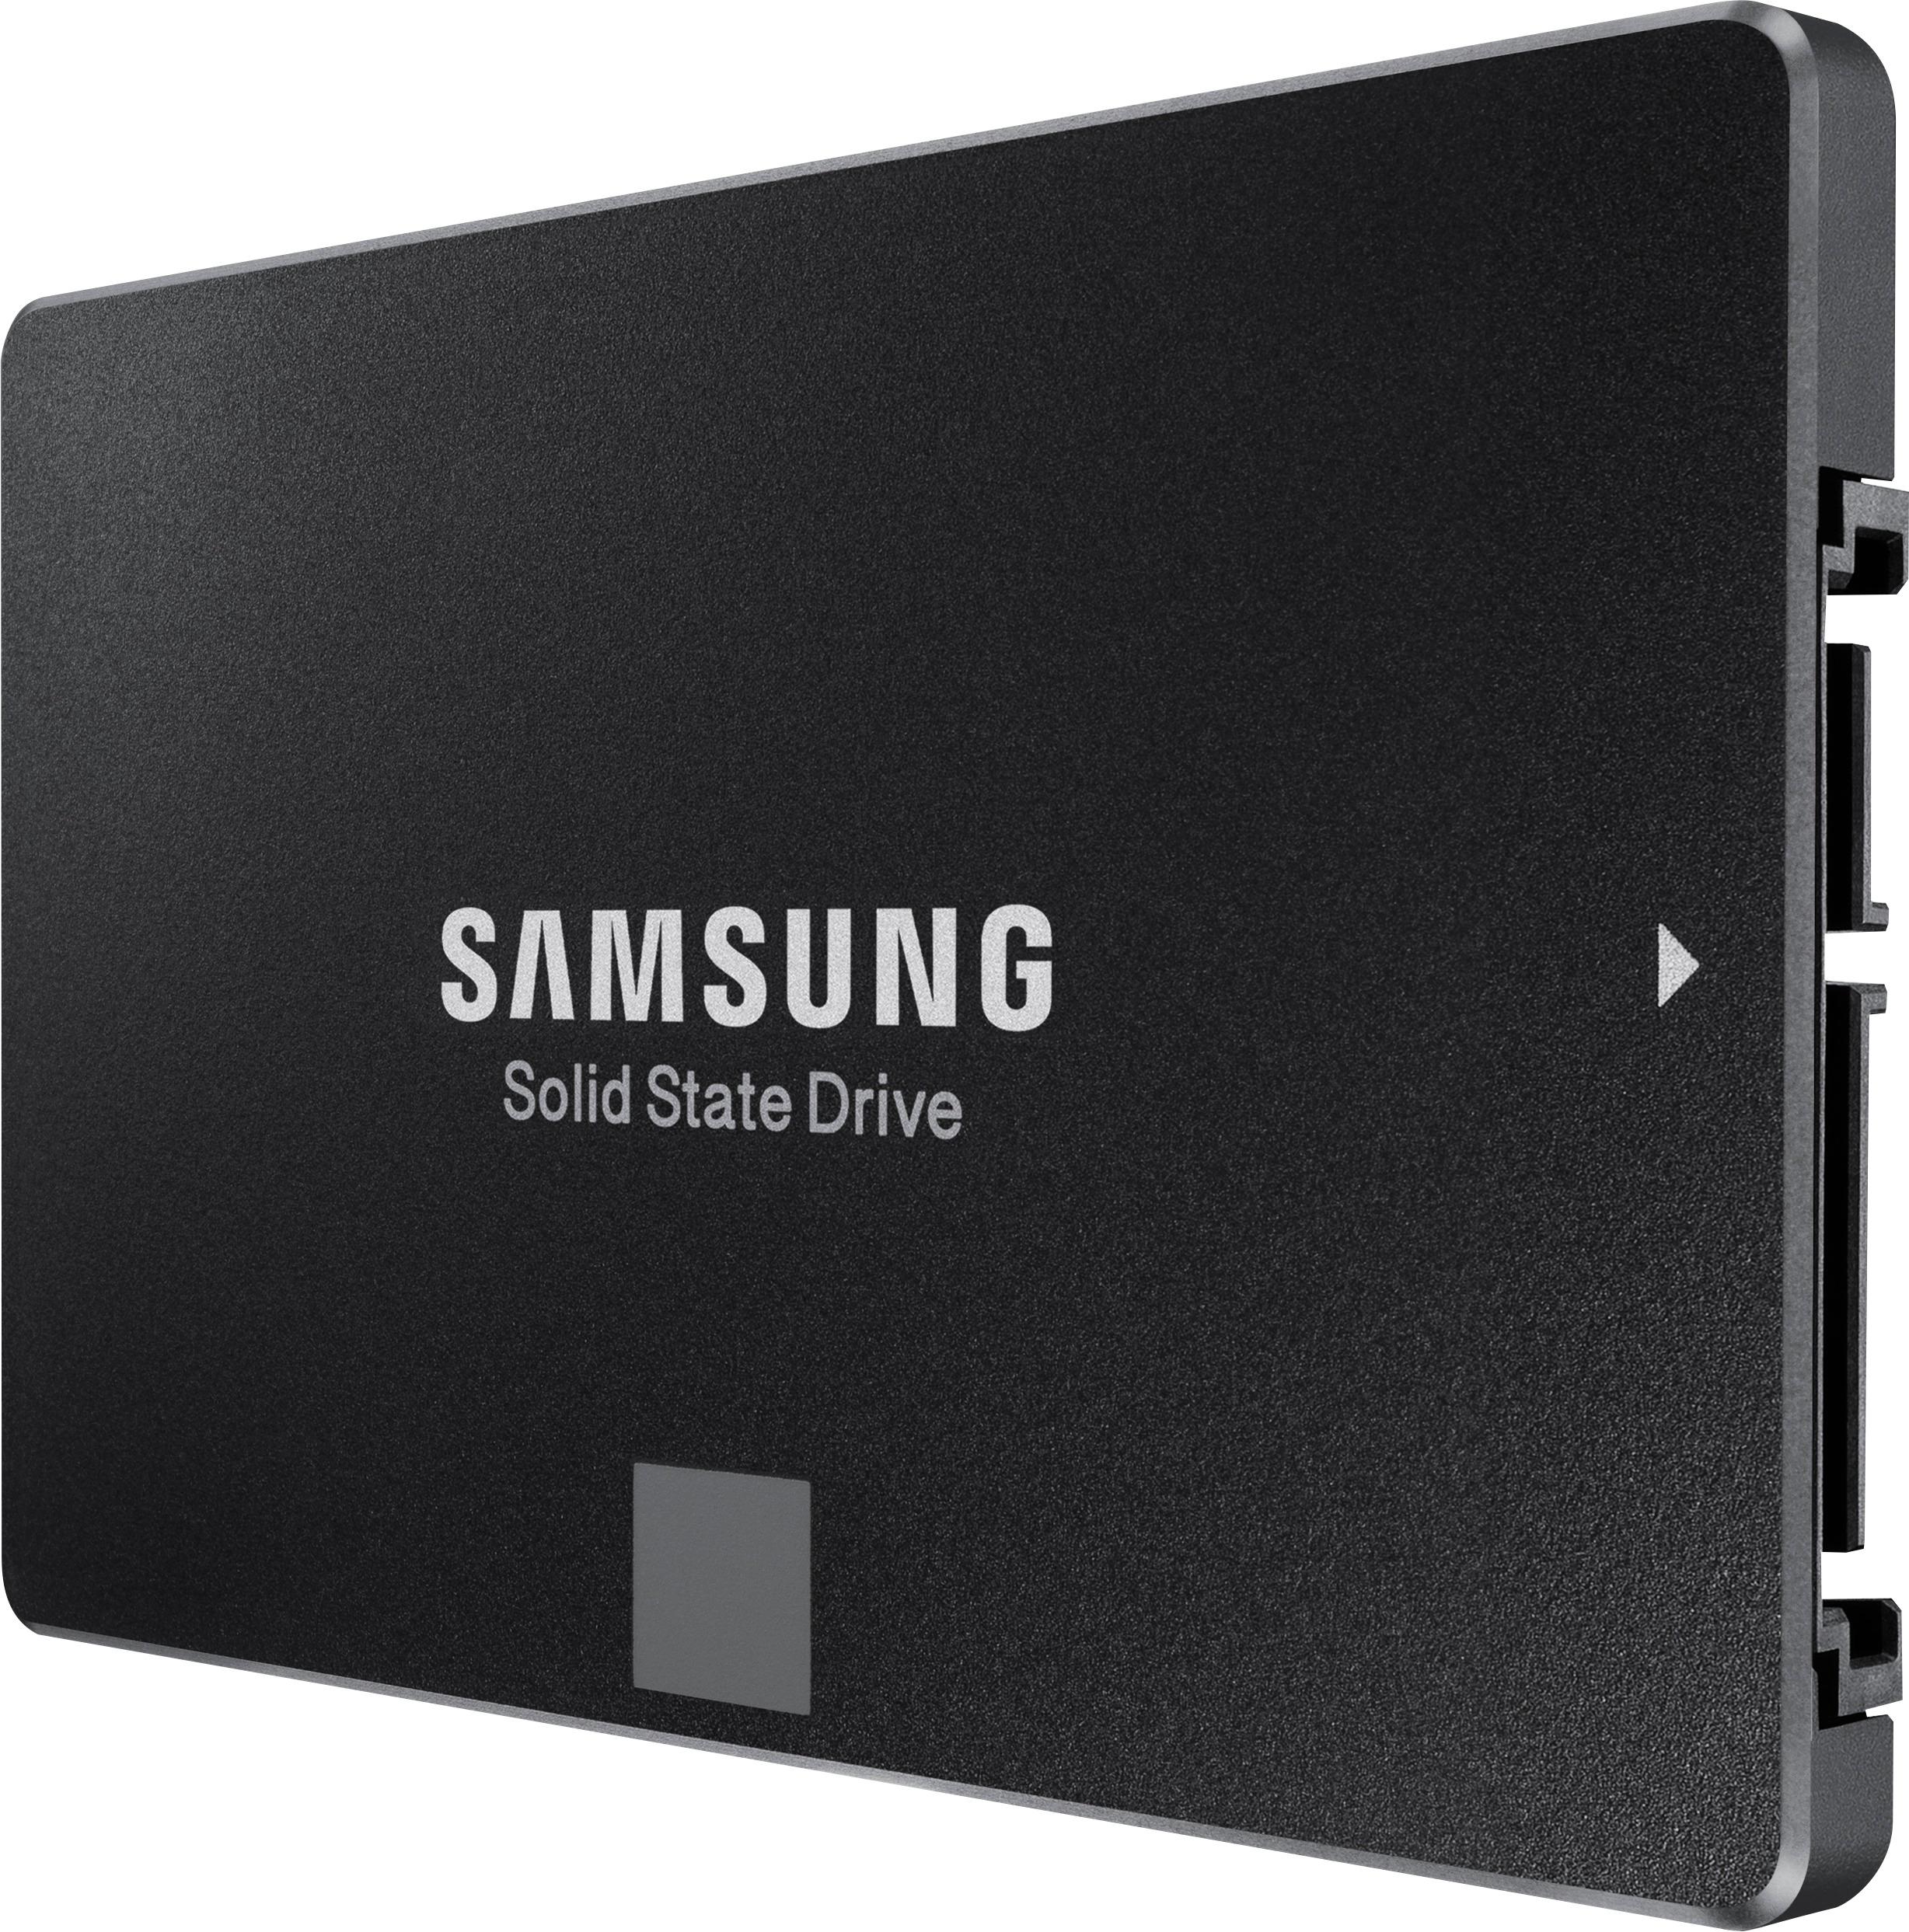 Buy: Samsung 860 EVO 500GB SATA 2.5" Solid State